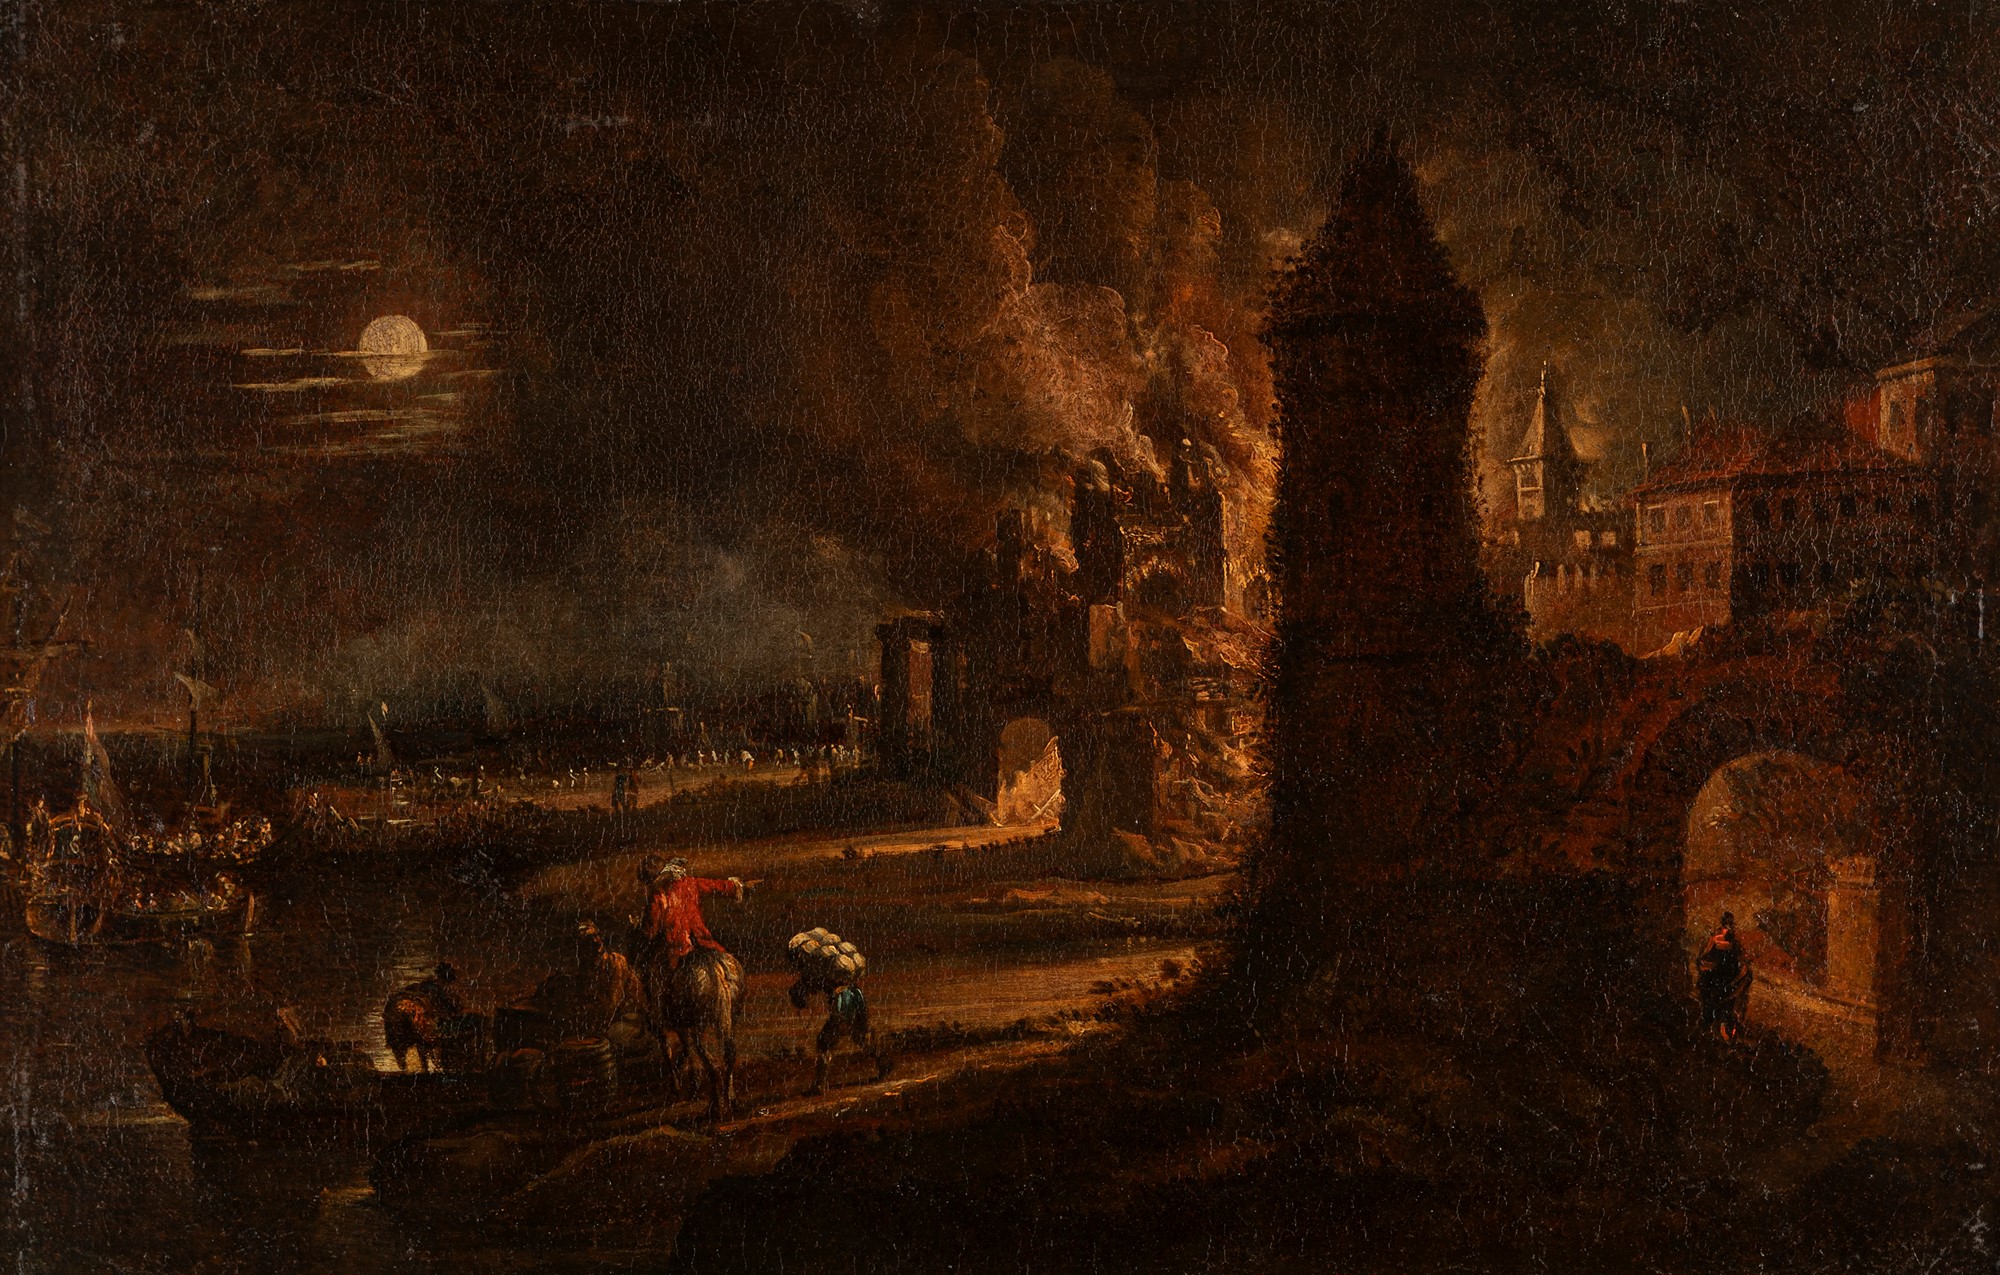 Flemish artist active in Italy, late seventeenth century - early eighteenth century - Night scene wi